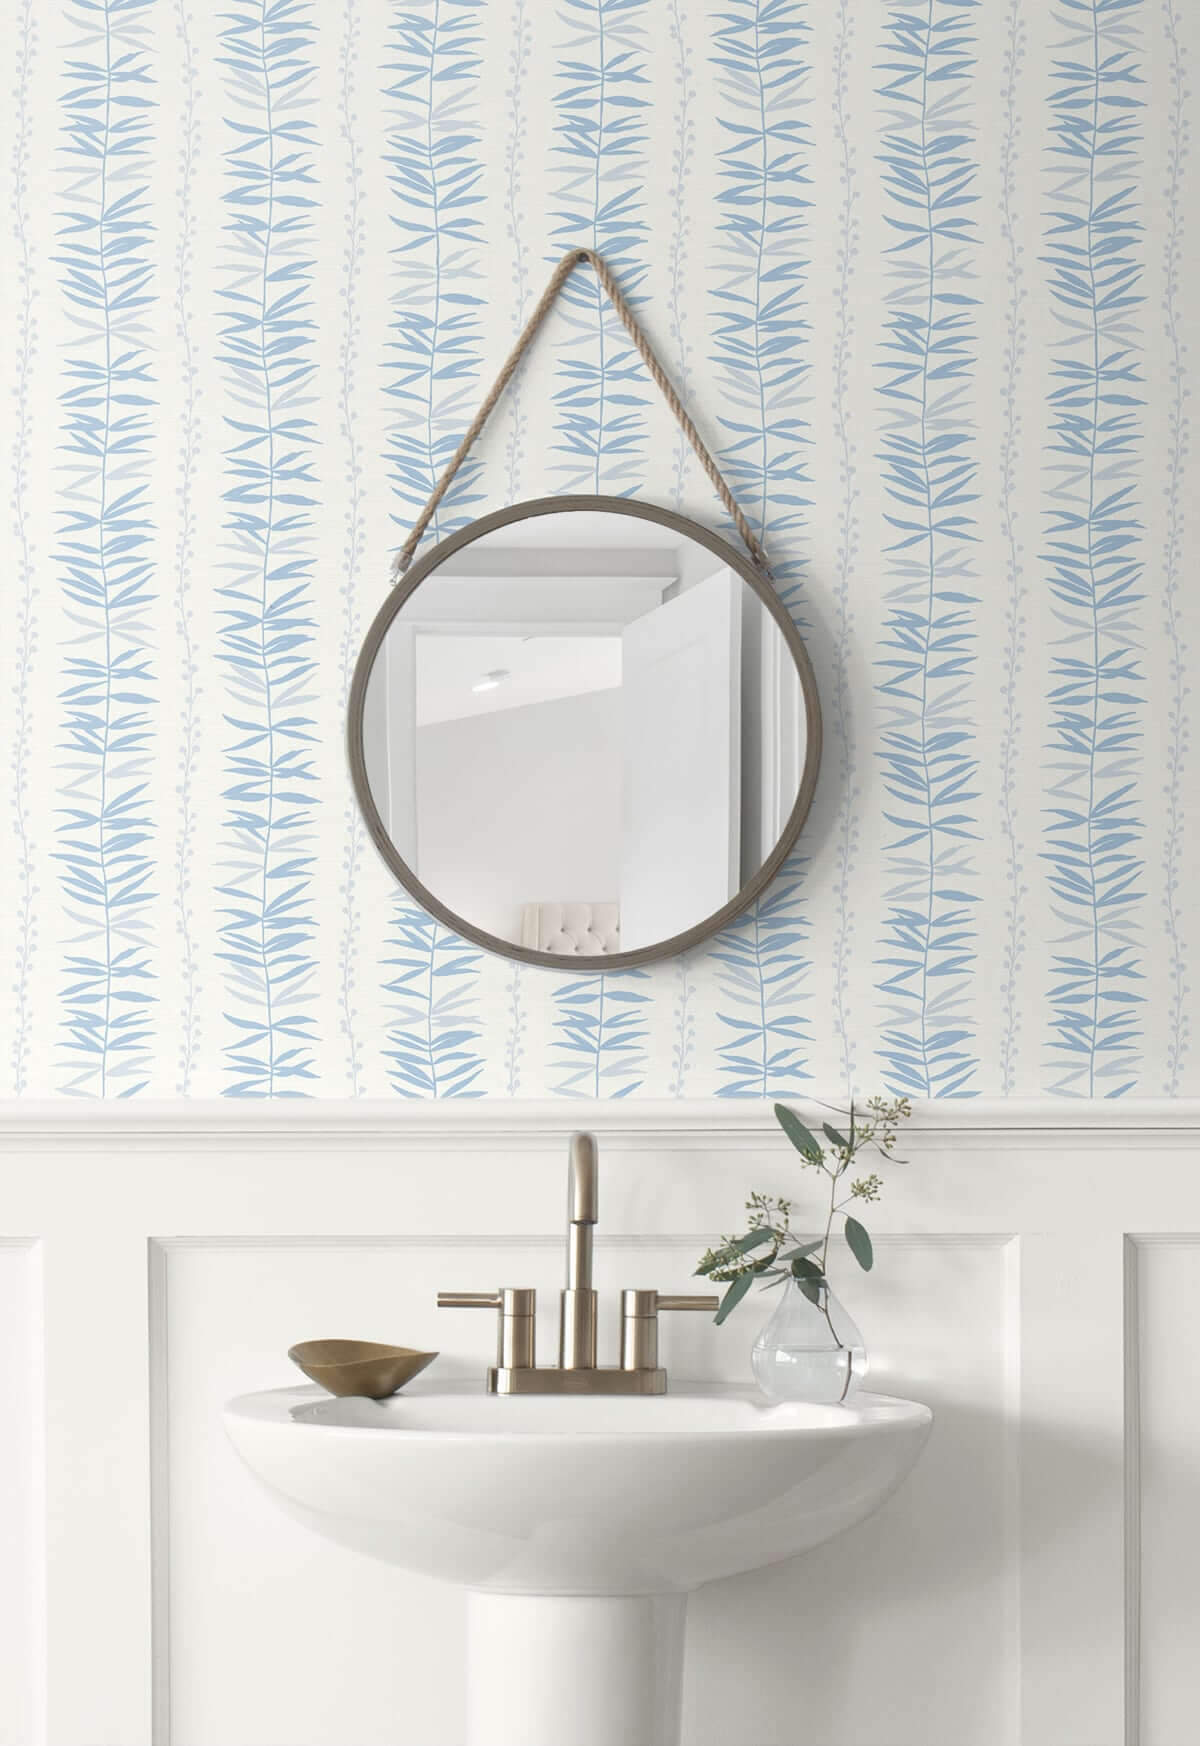 Seabrook Designs The Simple Life Summer Garland Wallpaper - Sky Blue